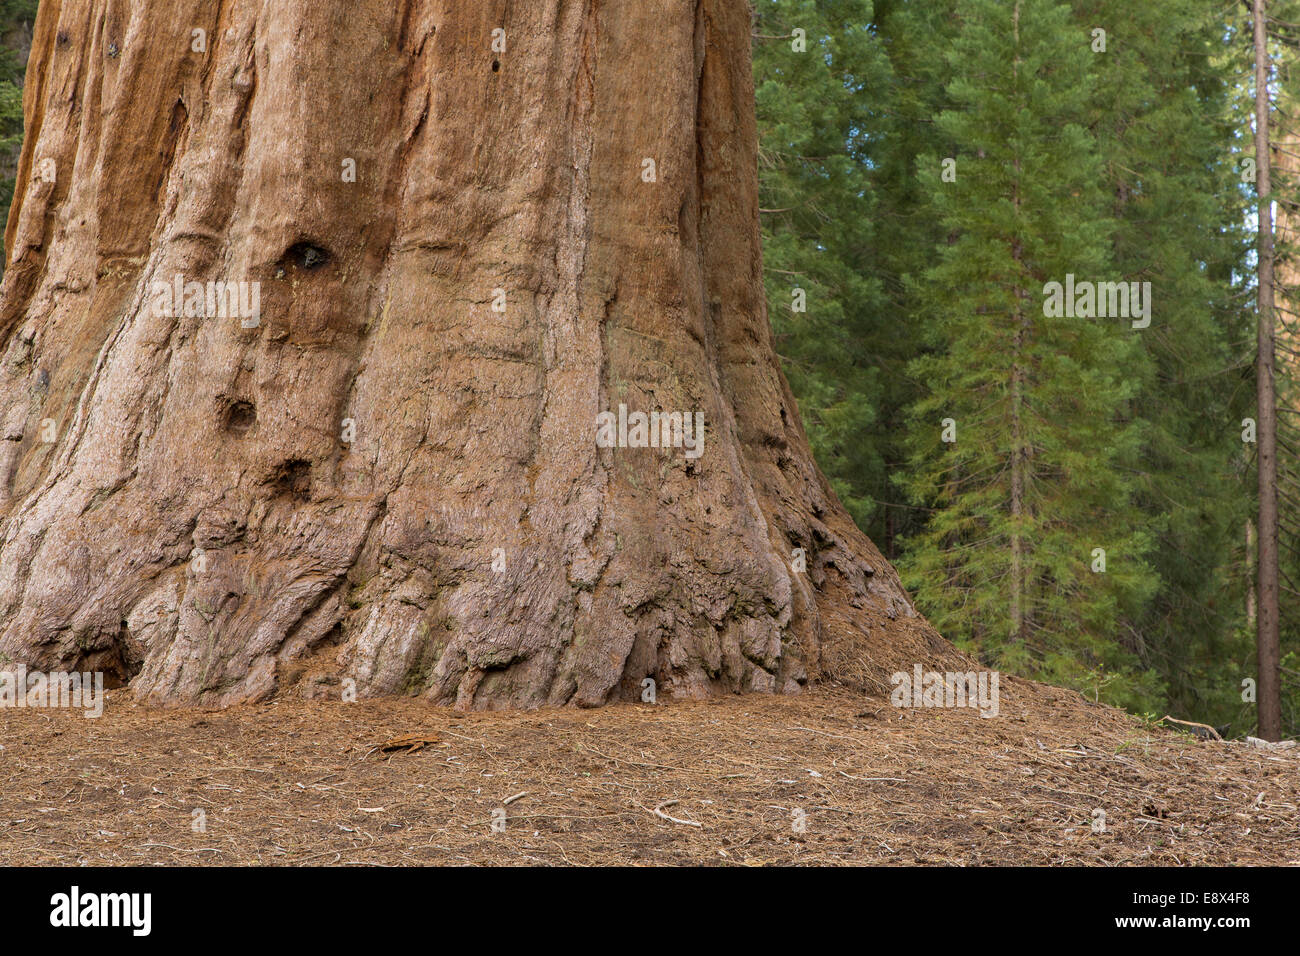 La secuoya gigante o secuoya Sequoiadendron giganteum, Sierra Nevada, California. La base del tronco Foto de stock